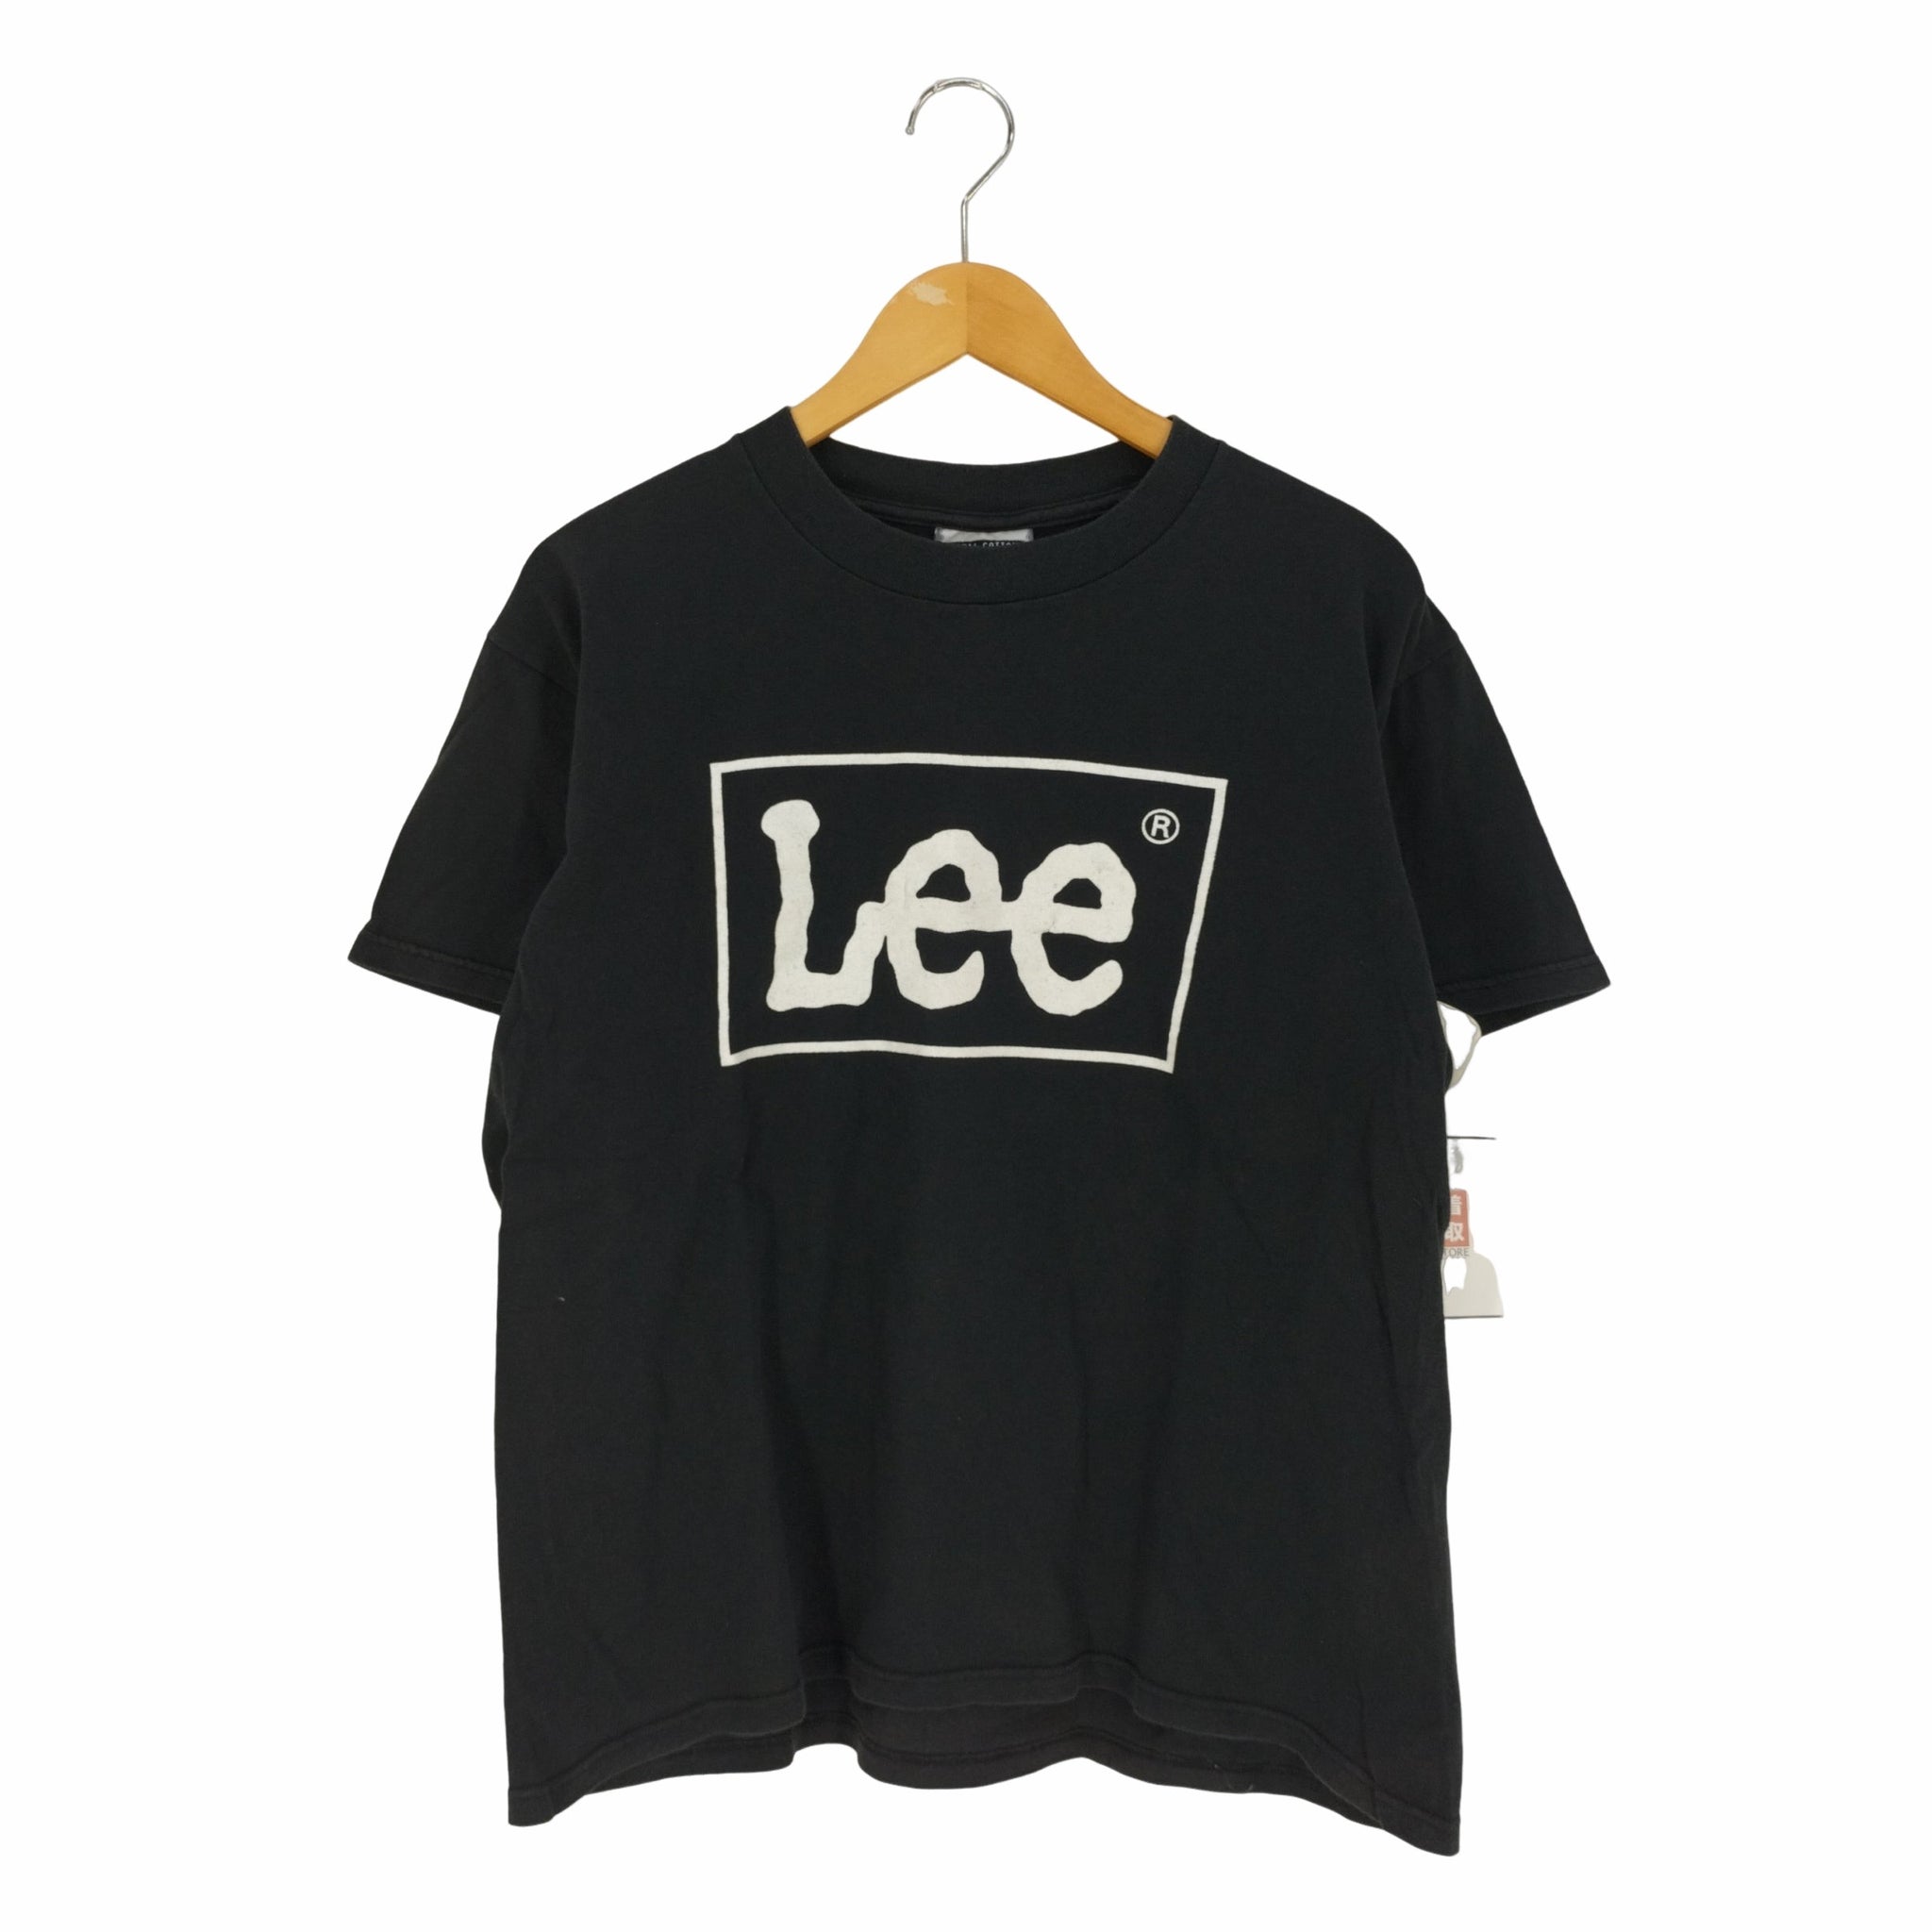 Lee(リー)USA製 TOTAL COTTON フロントロゴプリント クルーネックTシャツ